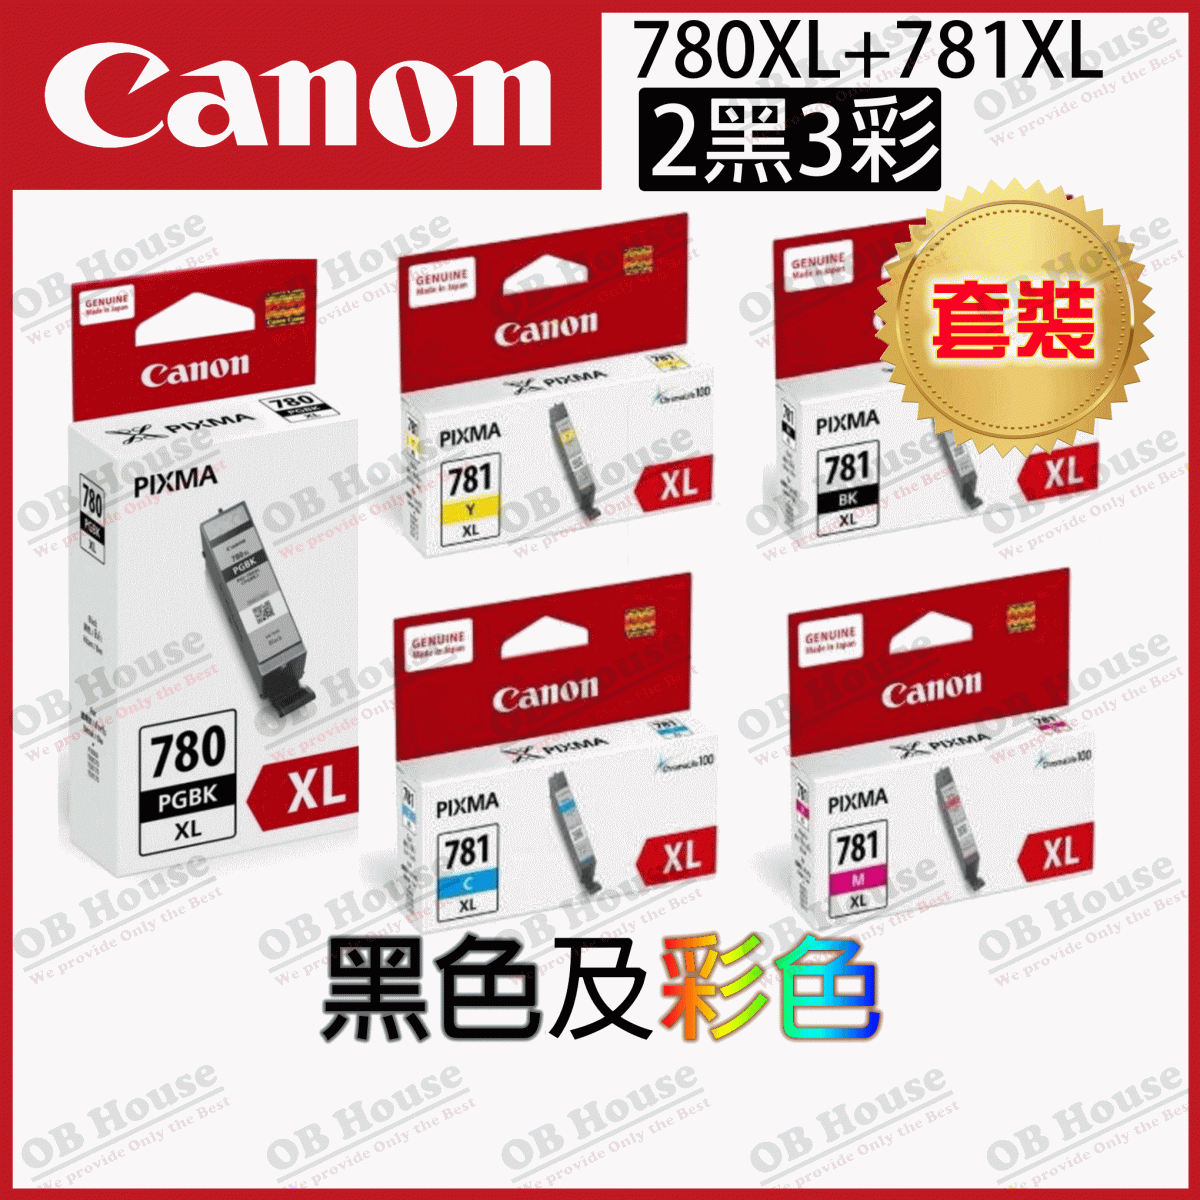 [COMBO] 780XL + 781XL High Capacity Ink Cartridge - Includes : PGI-780XL, CLI-781XLBK, CLI-781XLC, CLI-781XLM, CLI-781XLY #PGI780XL #CLI781XL